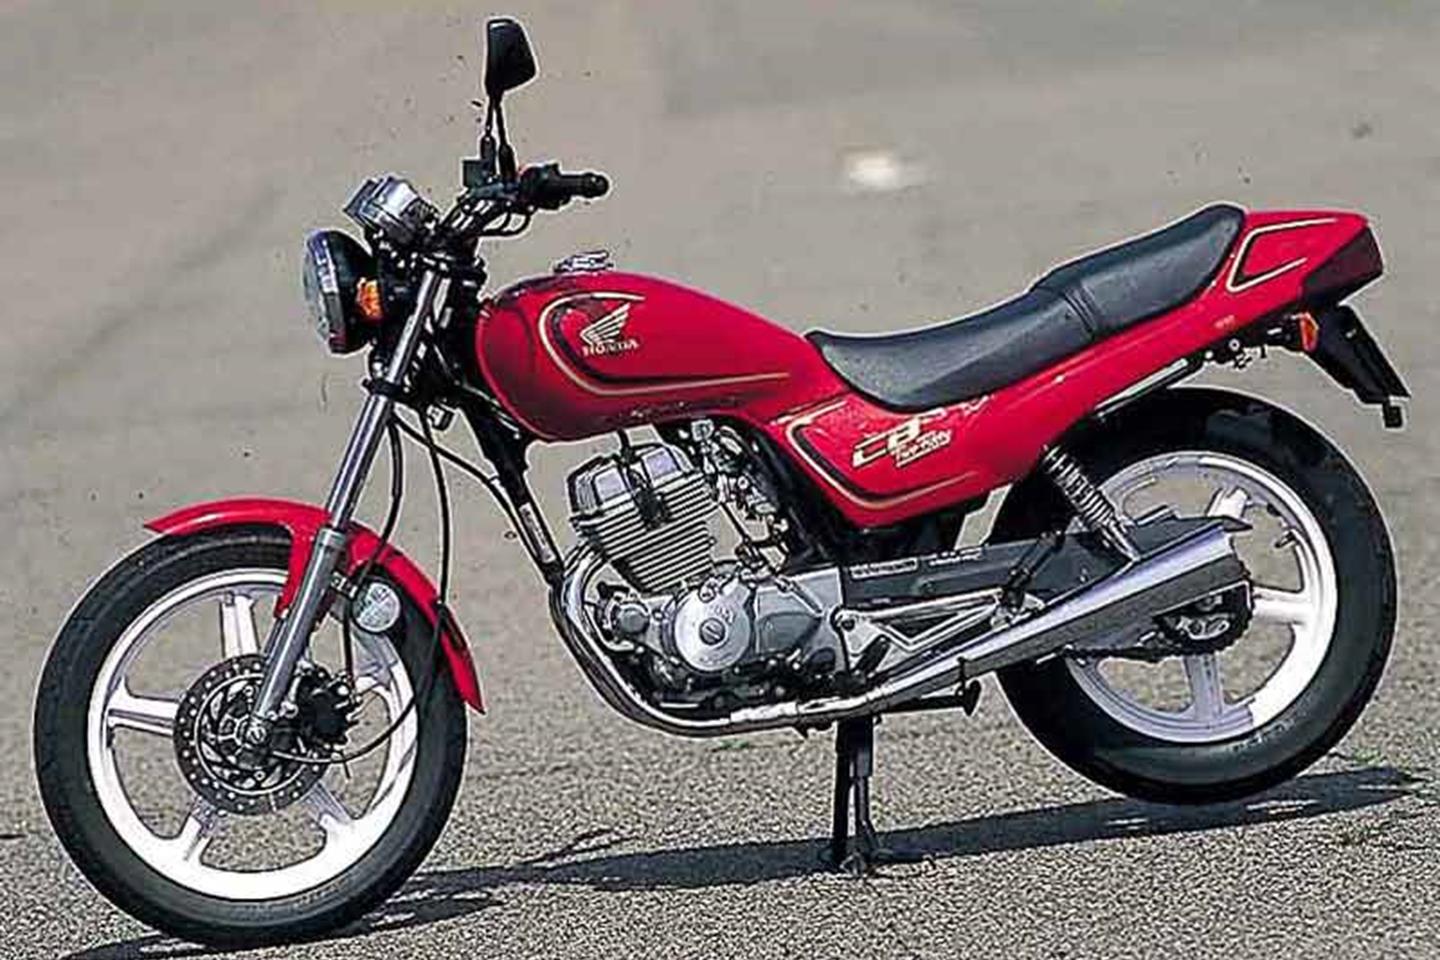 Honda CB250 (1992-2003) Review | Speed, Specs & Prices